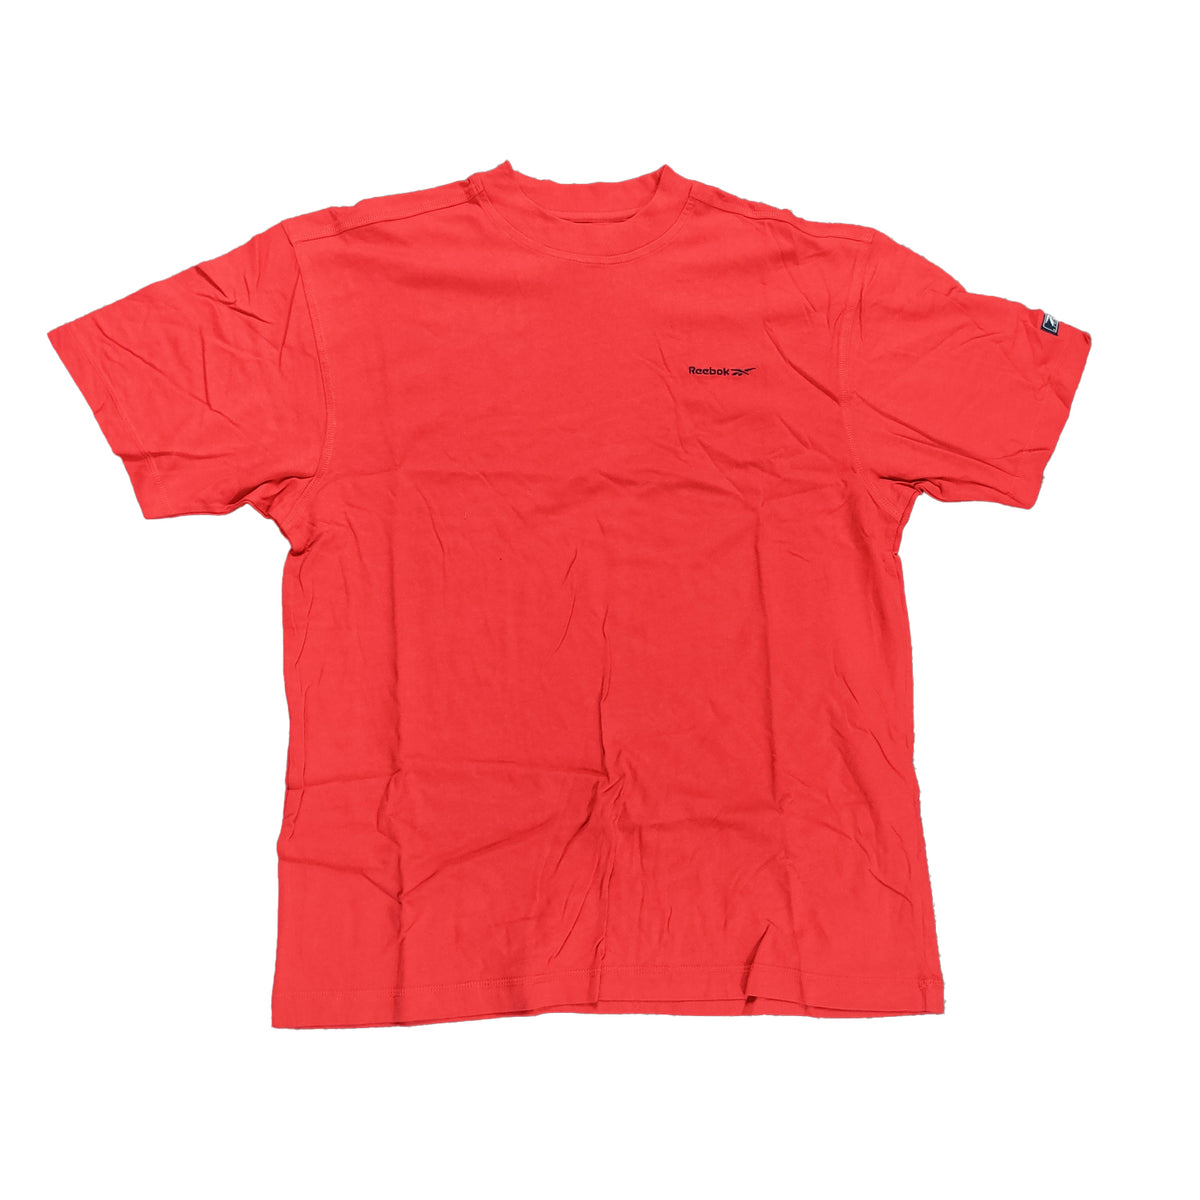 Reebok Mens Clearance Plain Red Crew T-Shirt - Medium